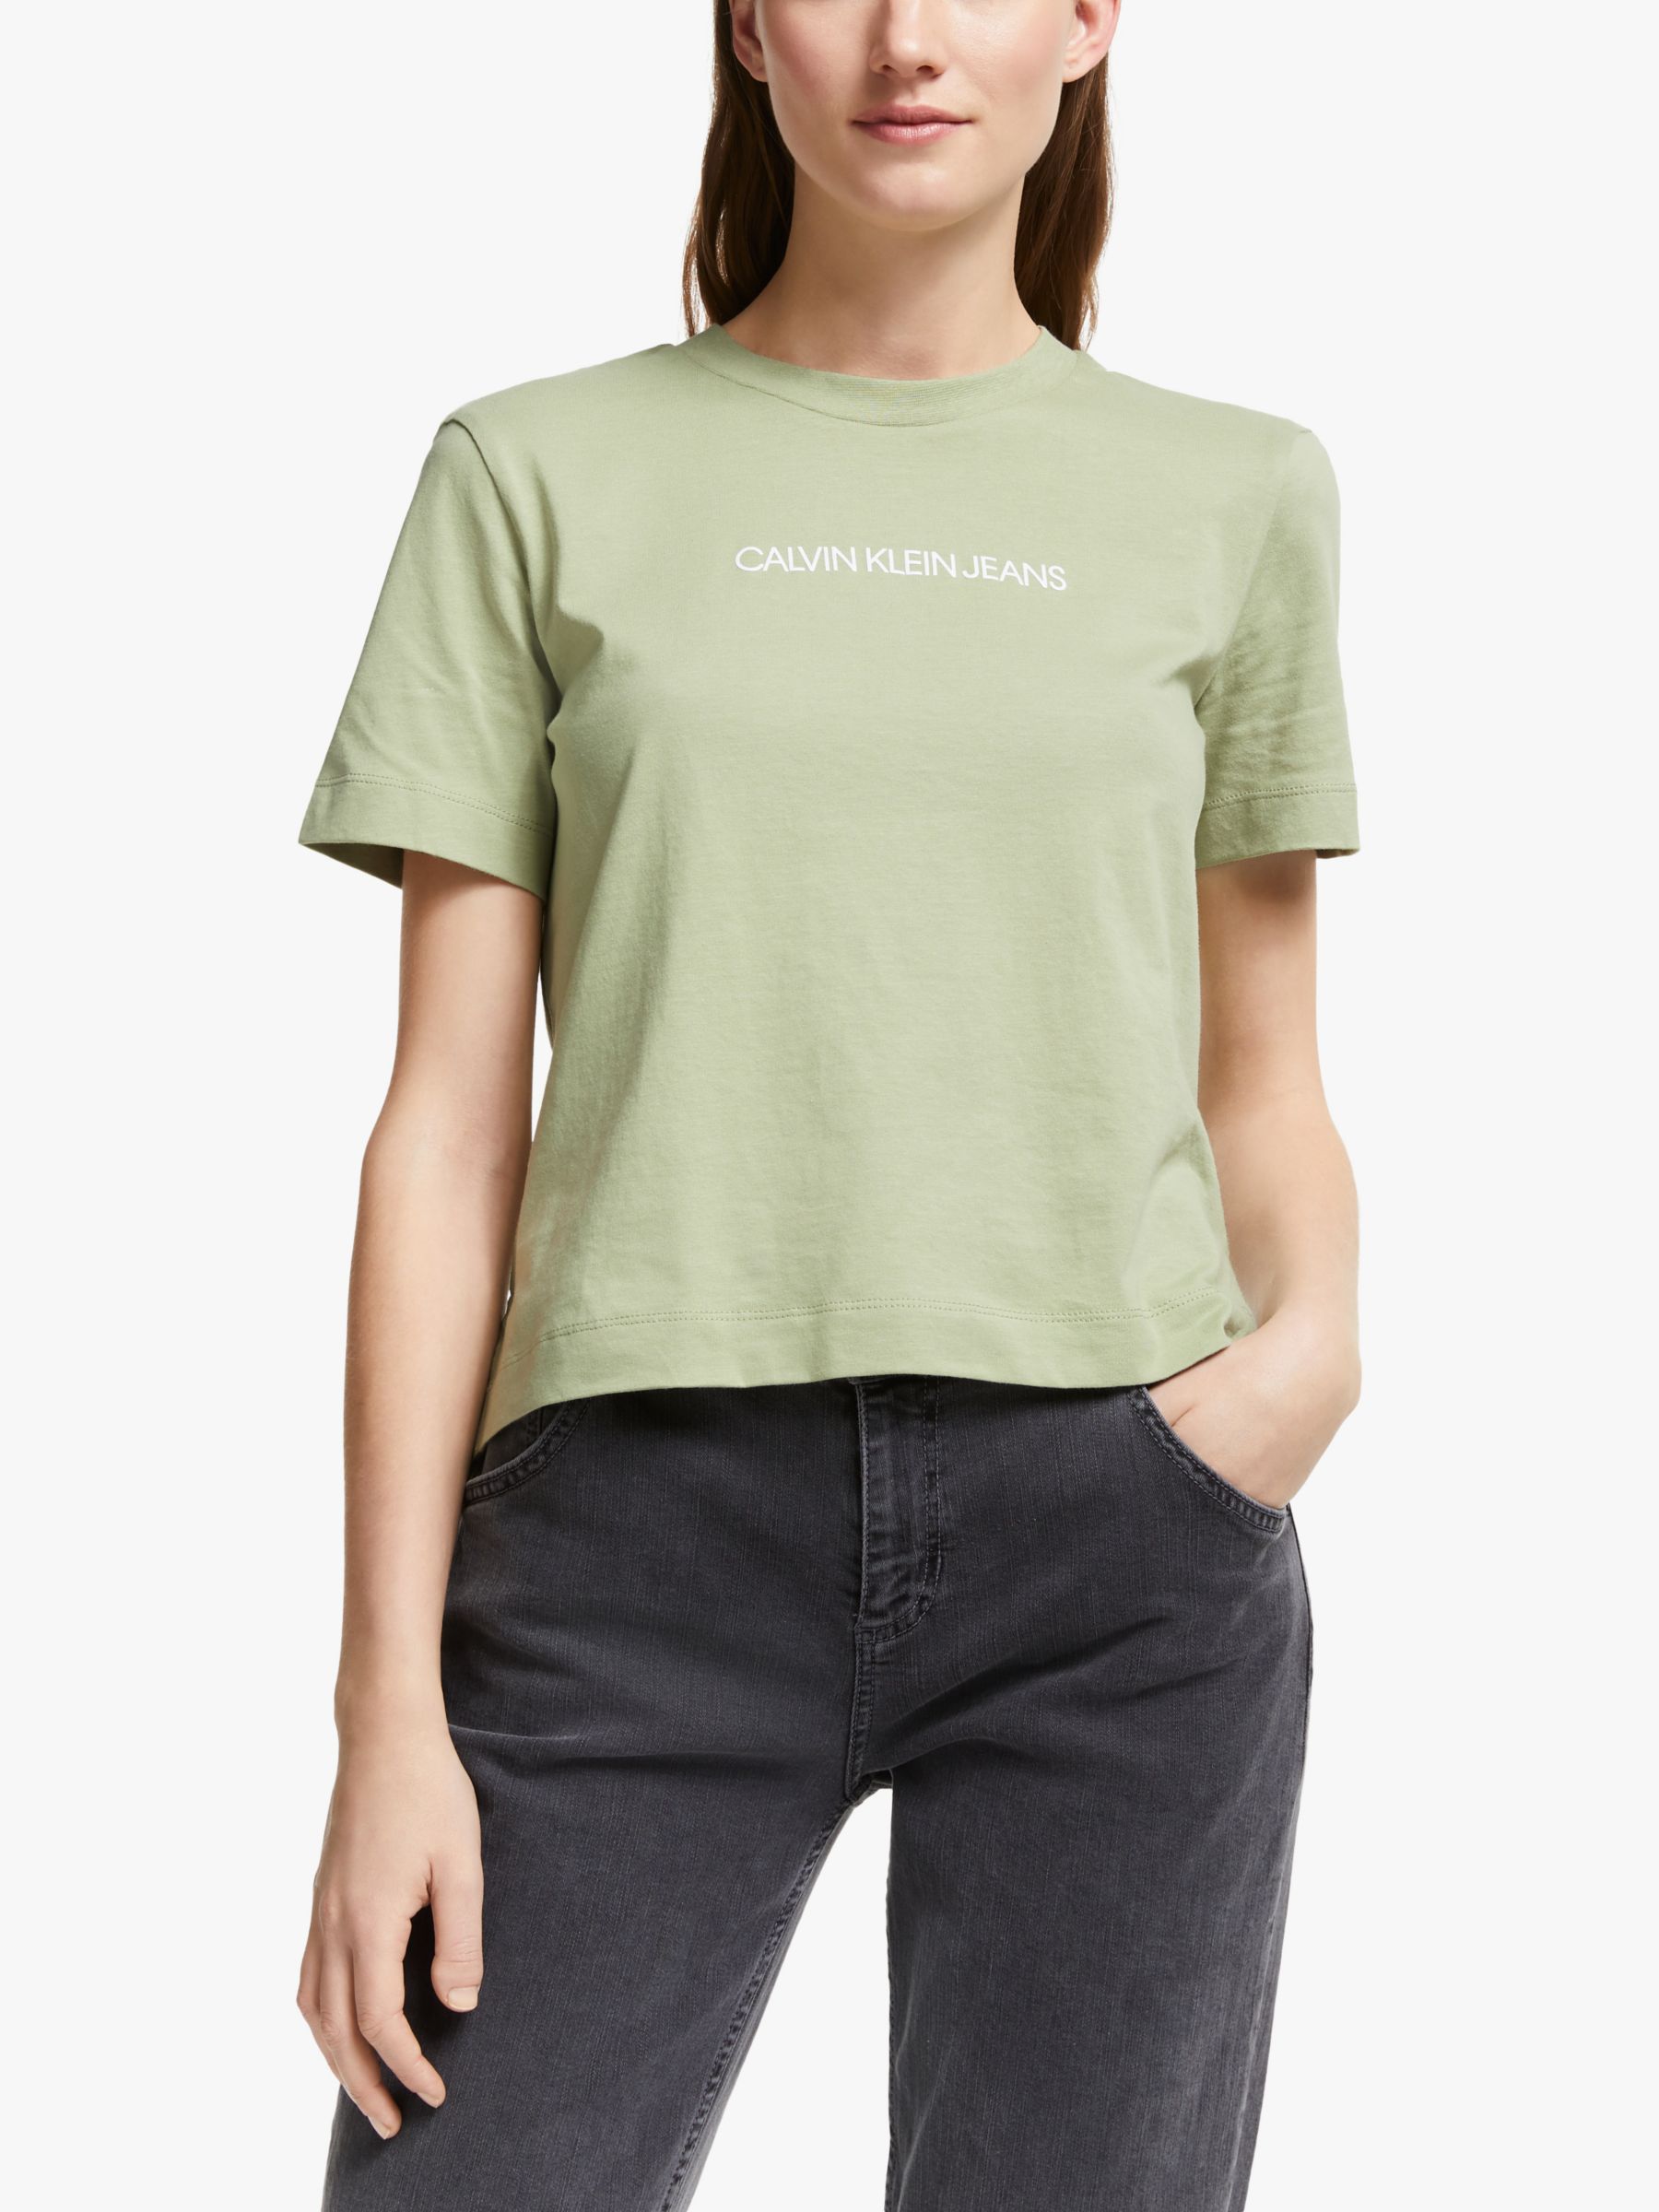 Calvin Klein Jeans Shrunken Institutional Cropped Logo T-Shirt, Earth Sage